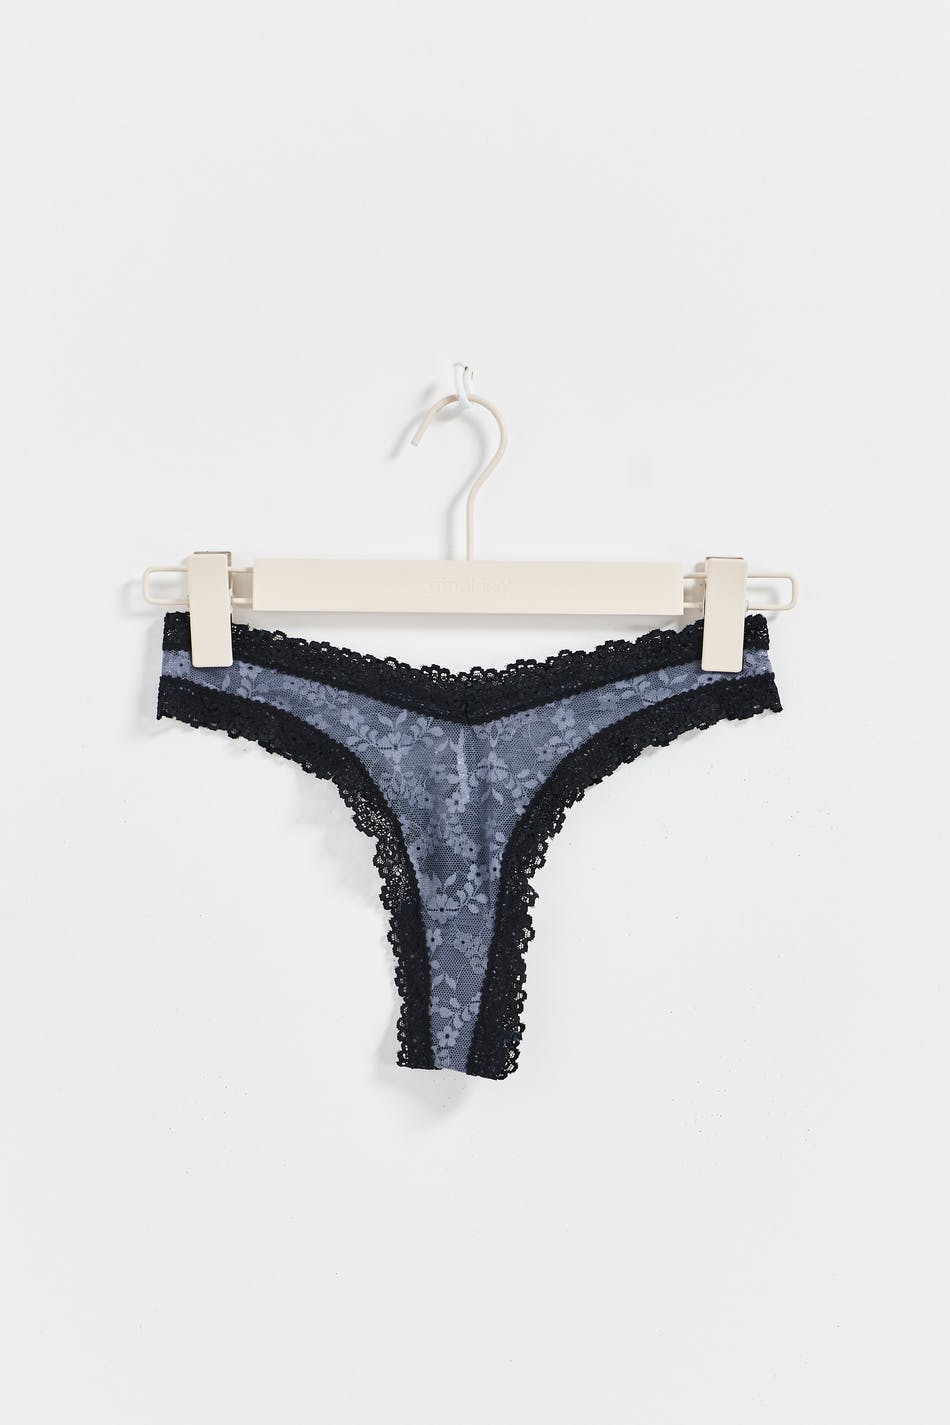 Victoria's Secret High-waist Thong Panty Black Mesh Floral Rhinestone Lace  M NWT